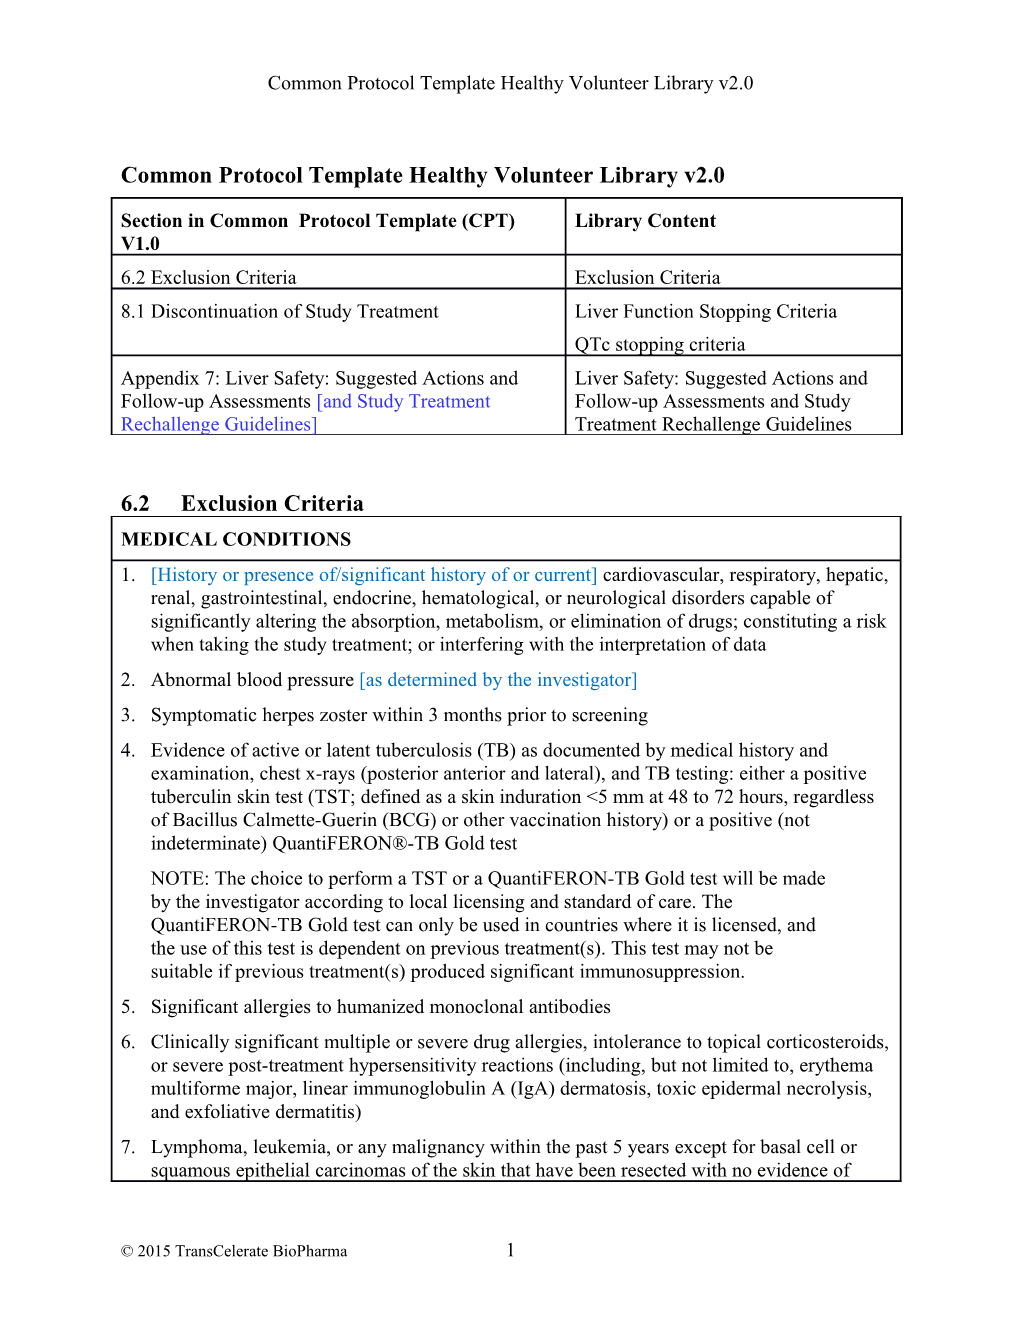 Common Protocol Template Healthy Volunteer Library V2.0